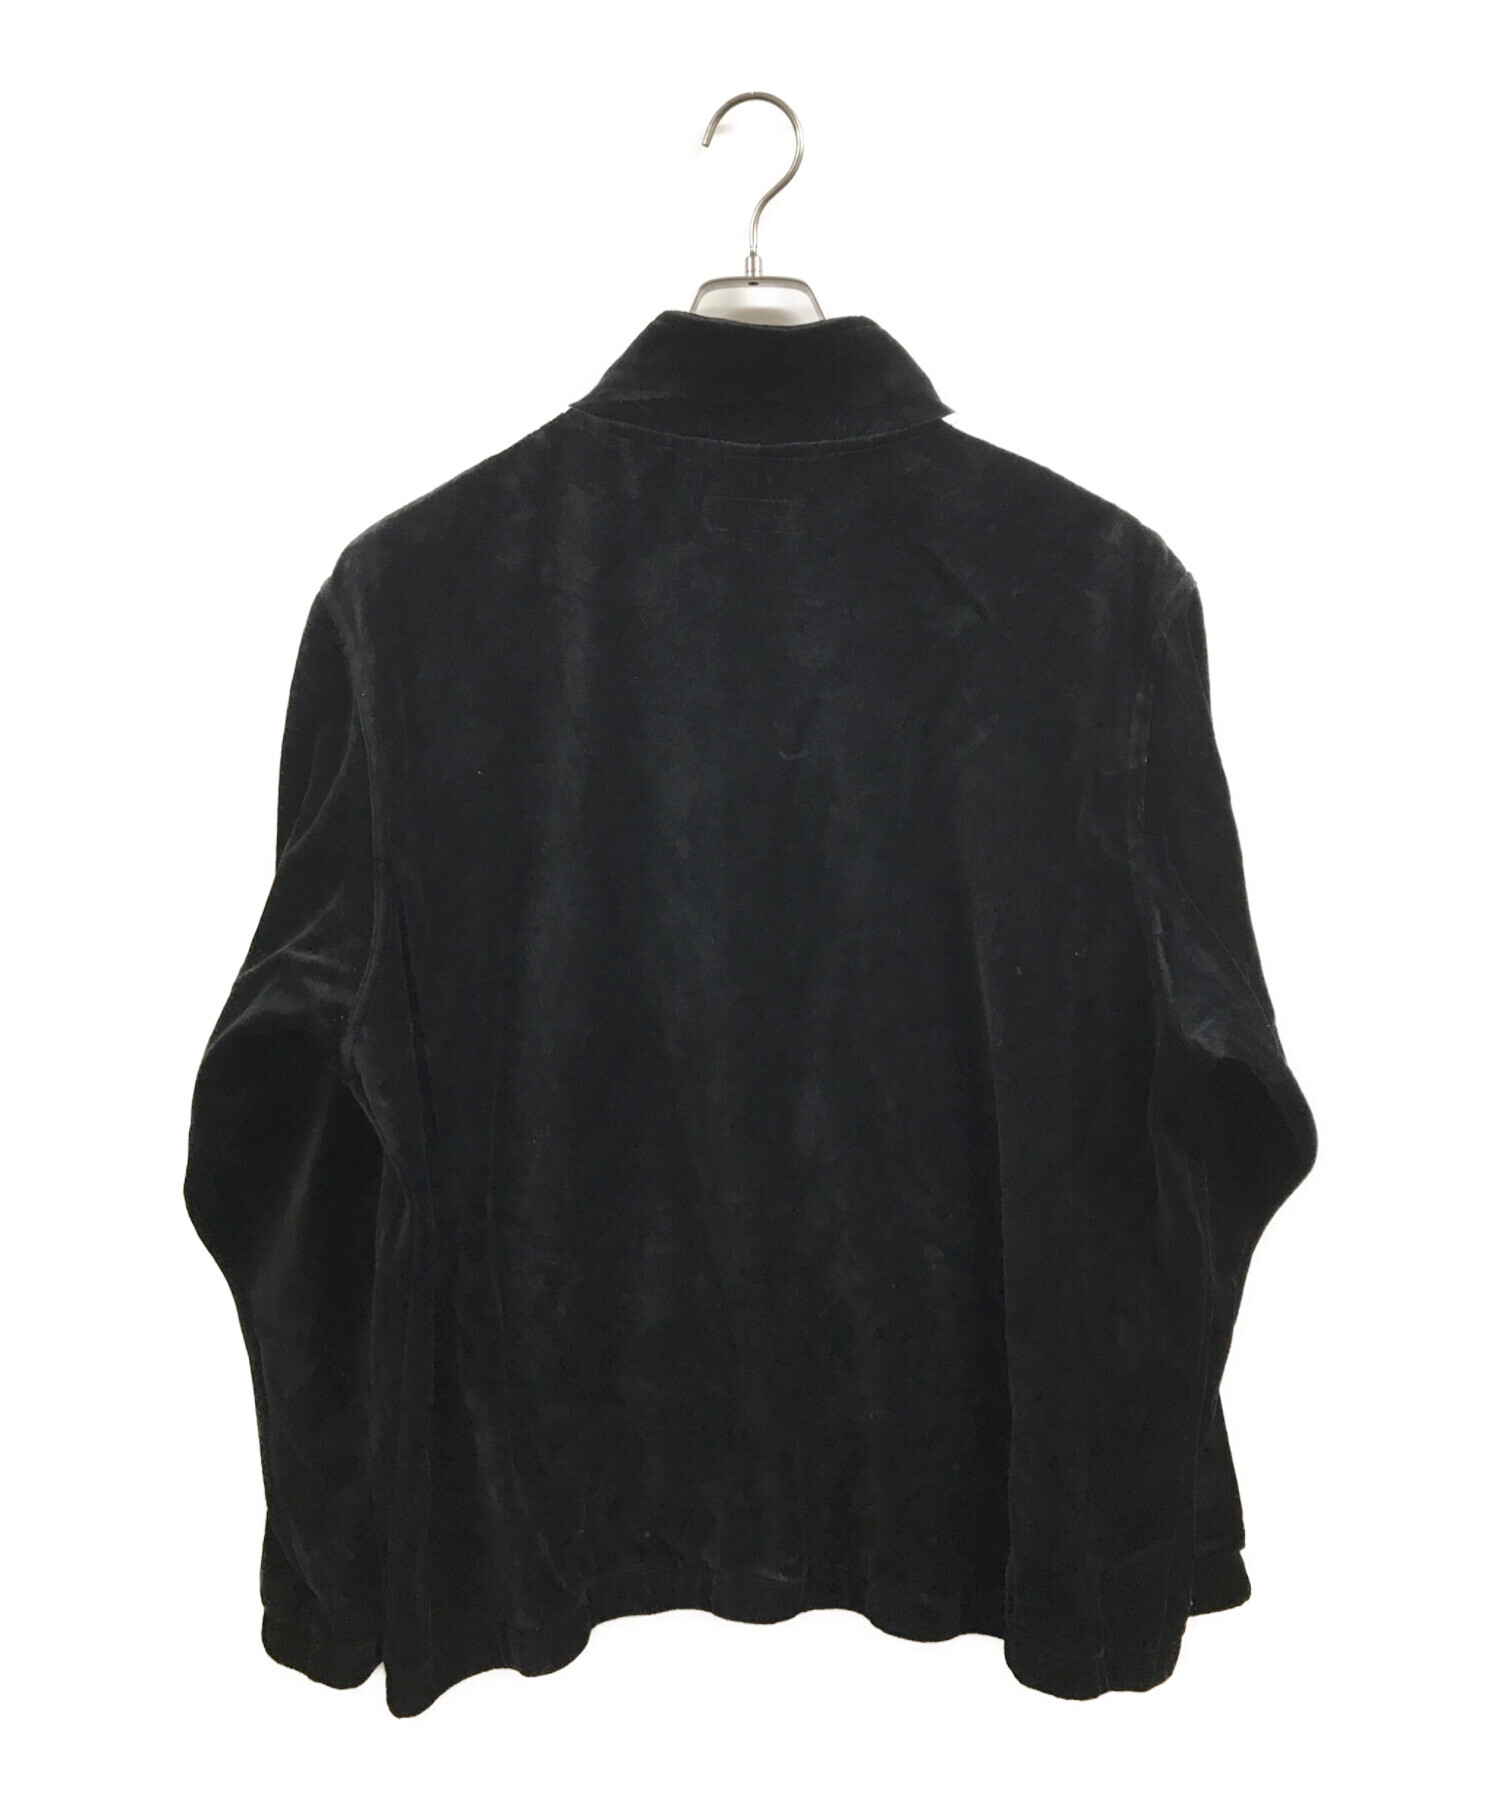 supreme track jacket XL 黒 ブラック